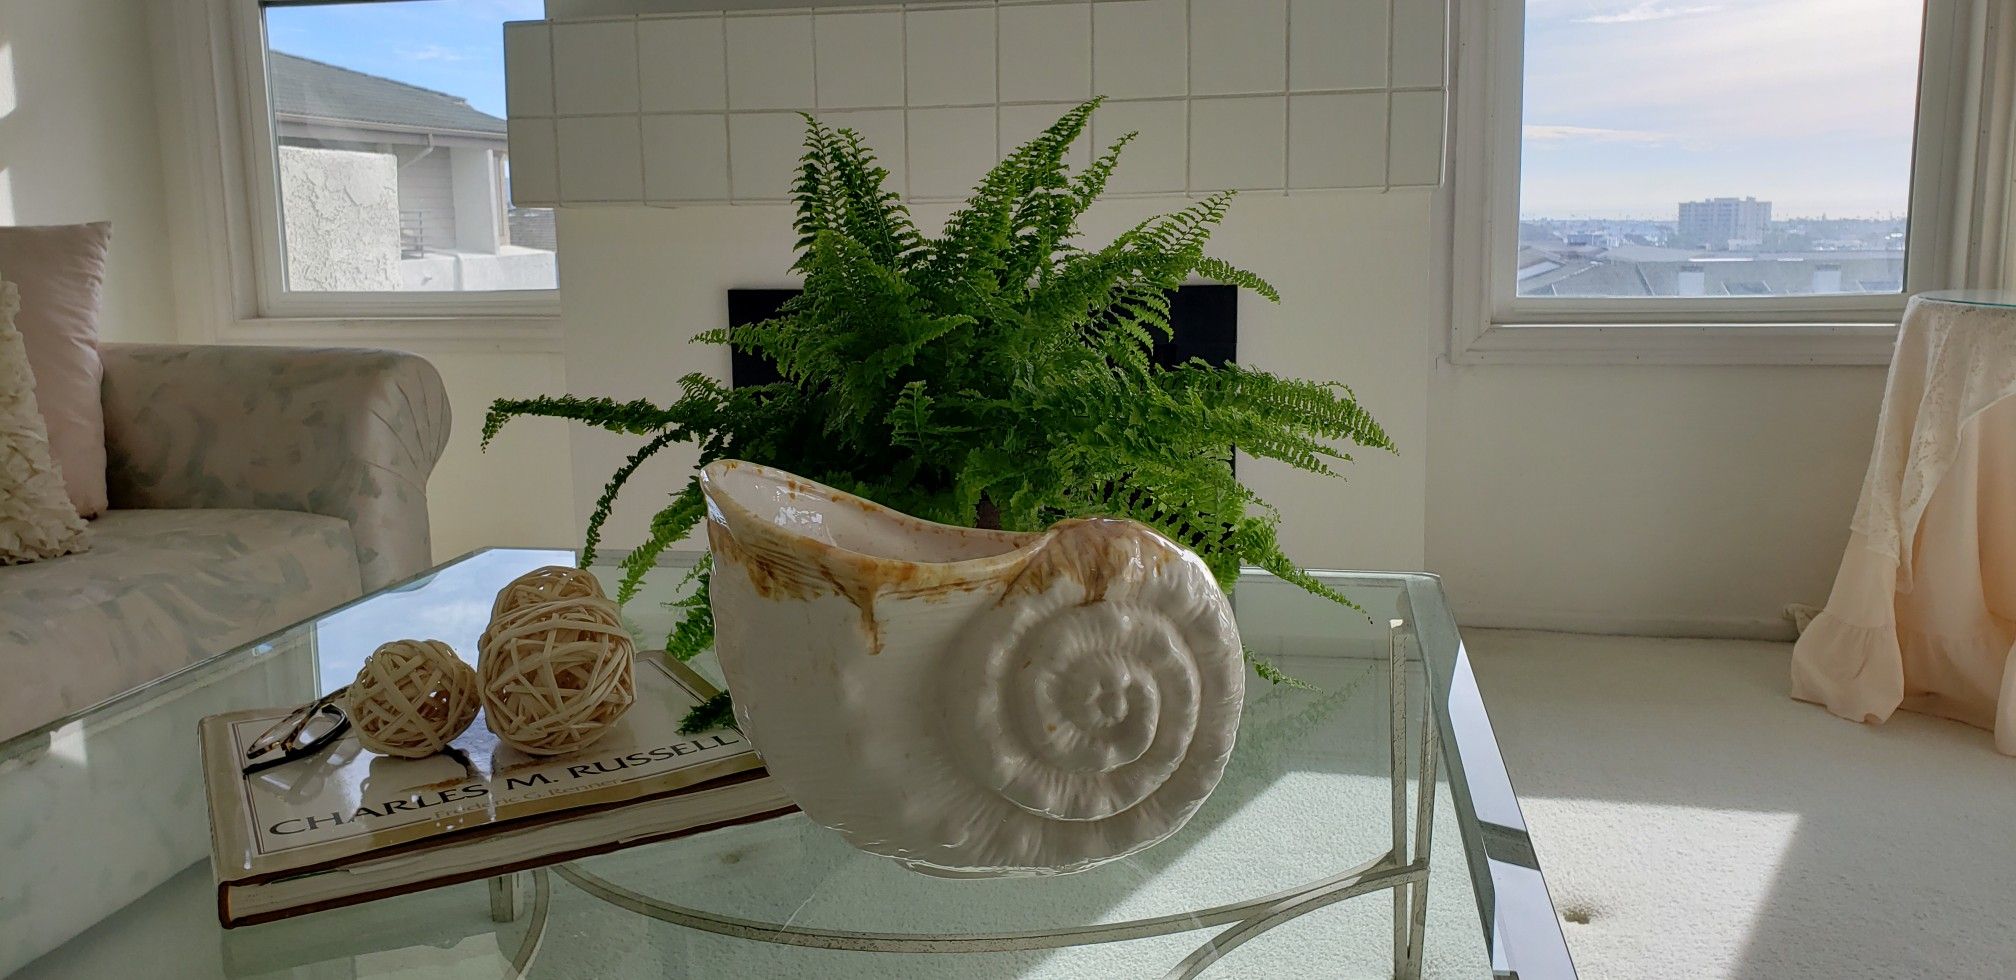 Super large, cool plant or ceramic pot/dish.